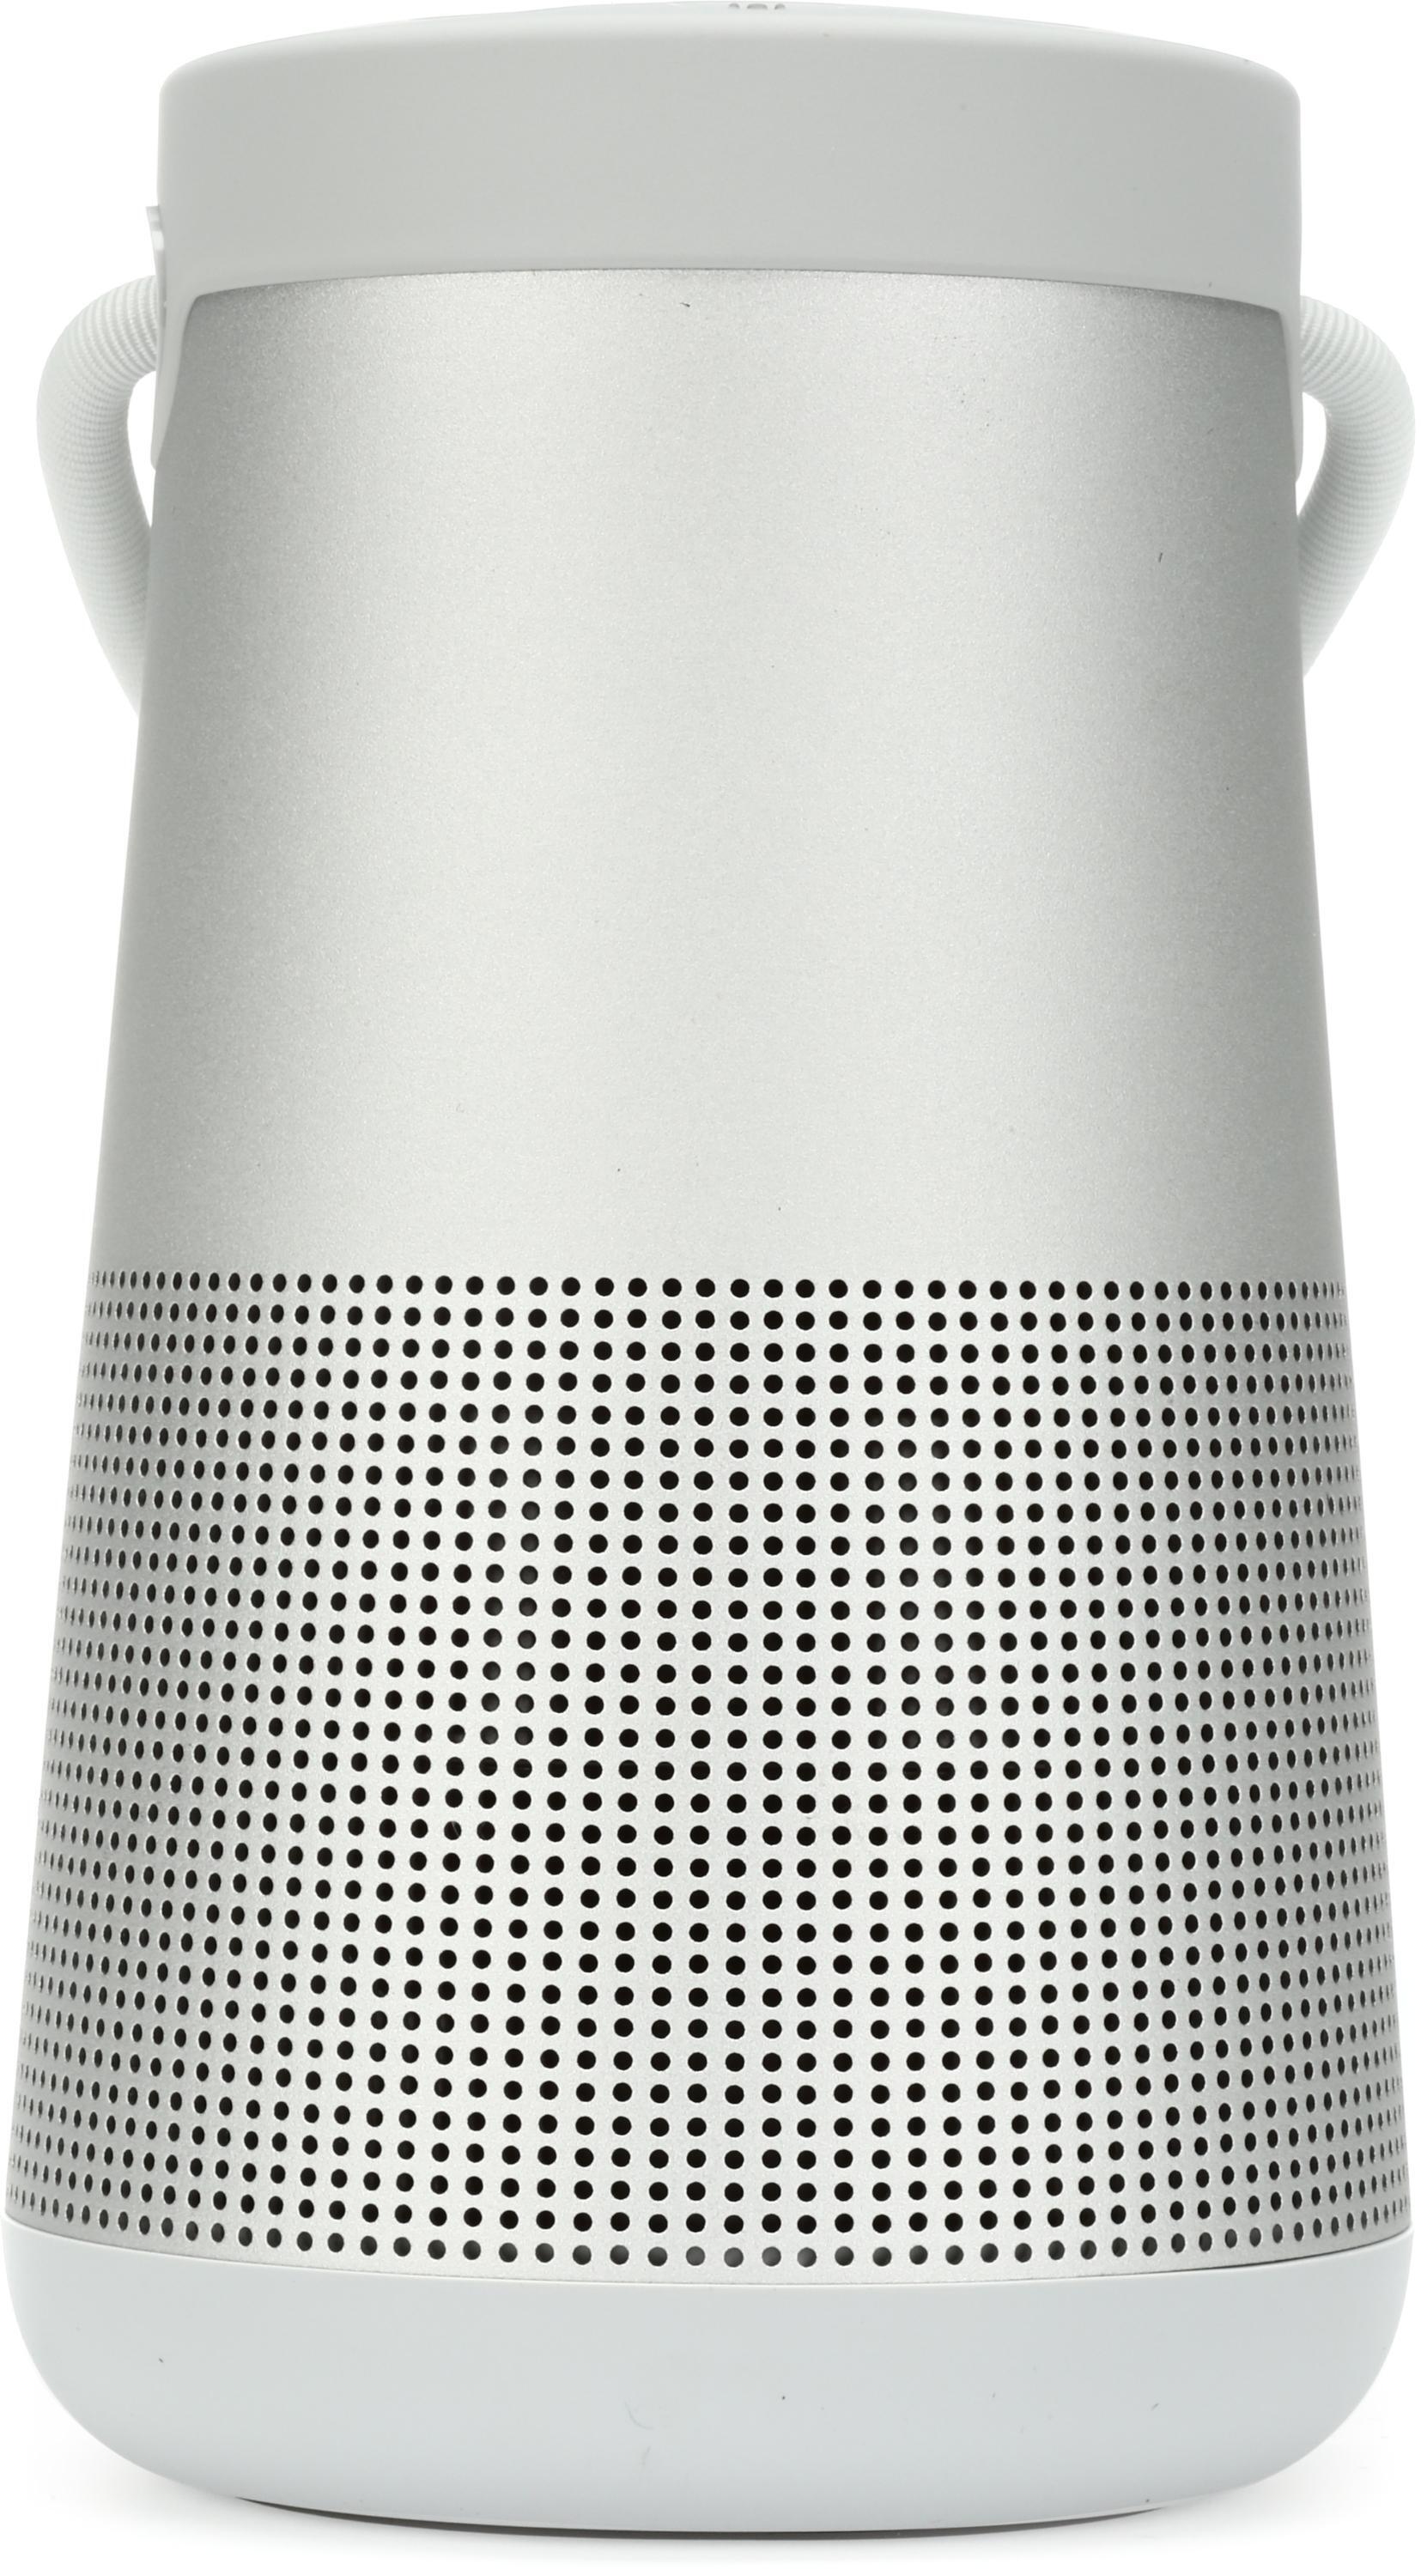 Bose SoundLink Revolve+ II Portable Bluetooth Speaker - Gray